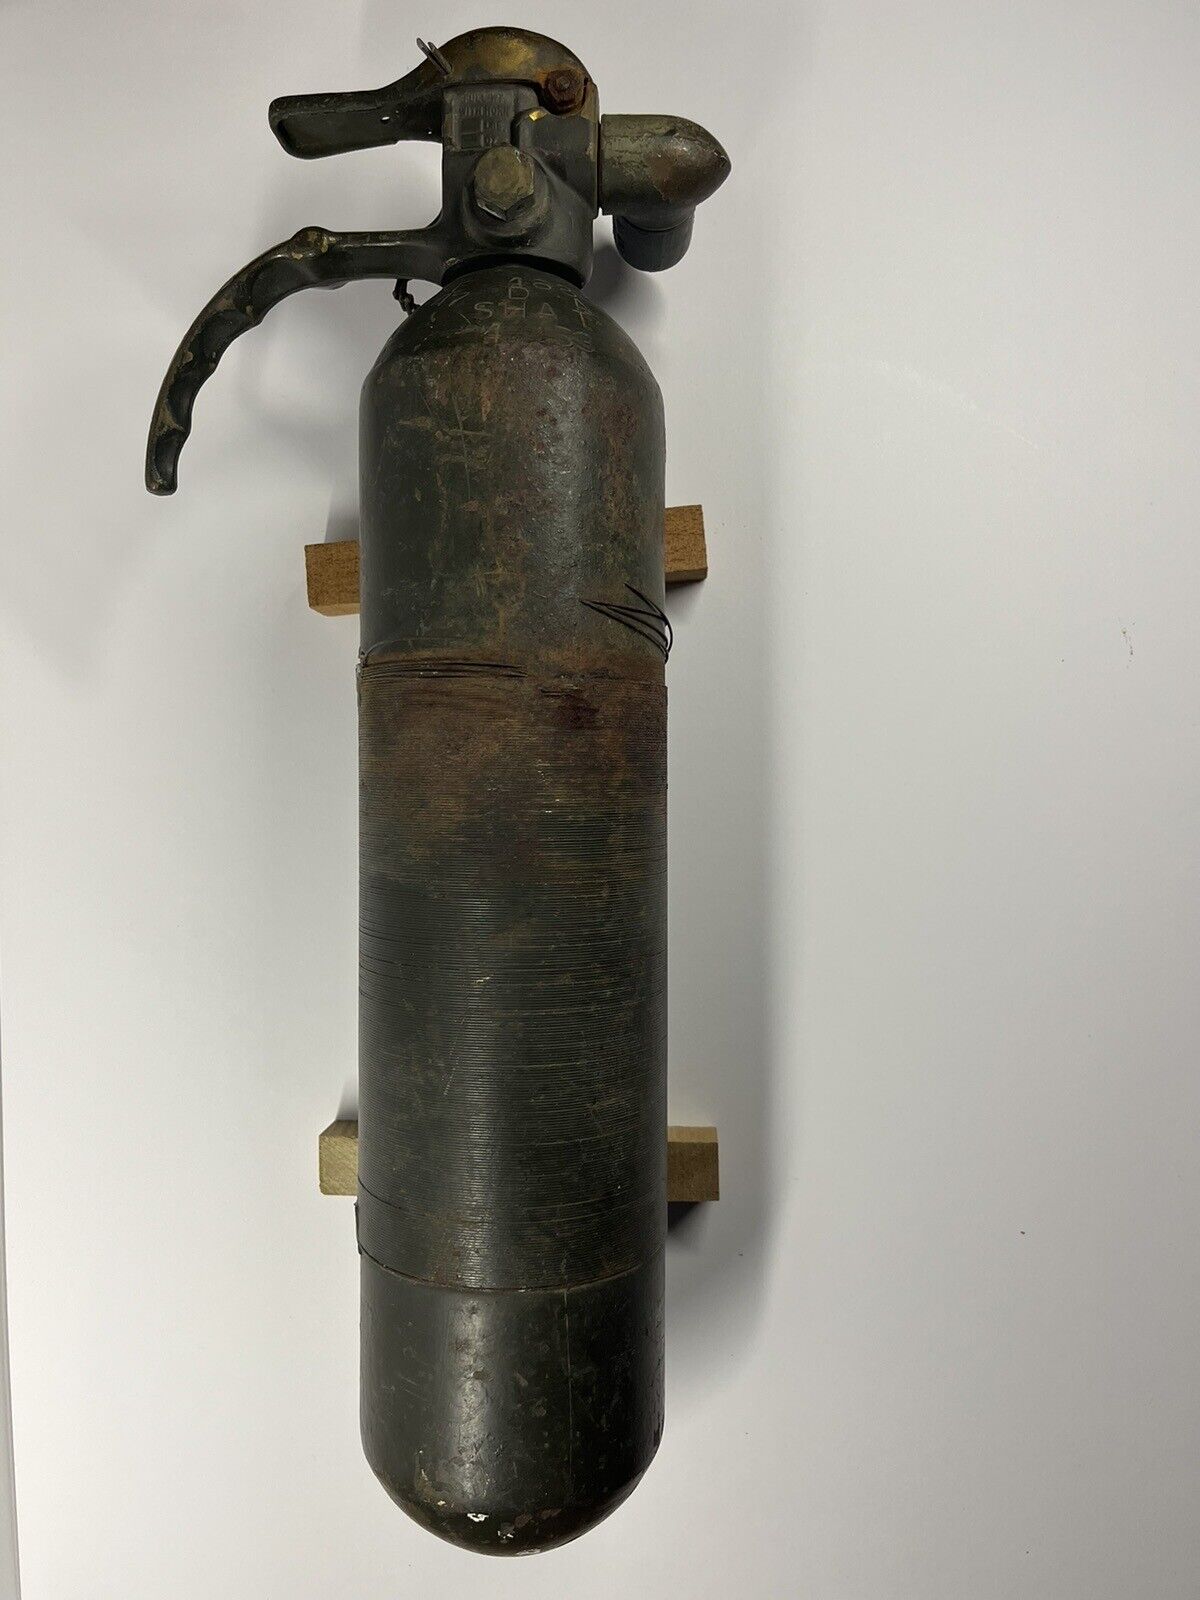   Randolph 1947 Military Co2 Fire Extinguisher Model E 2-1/2B